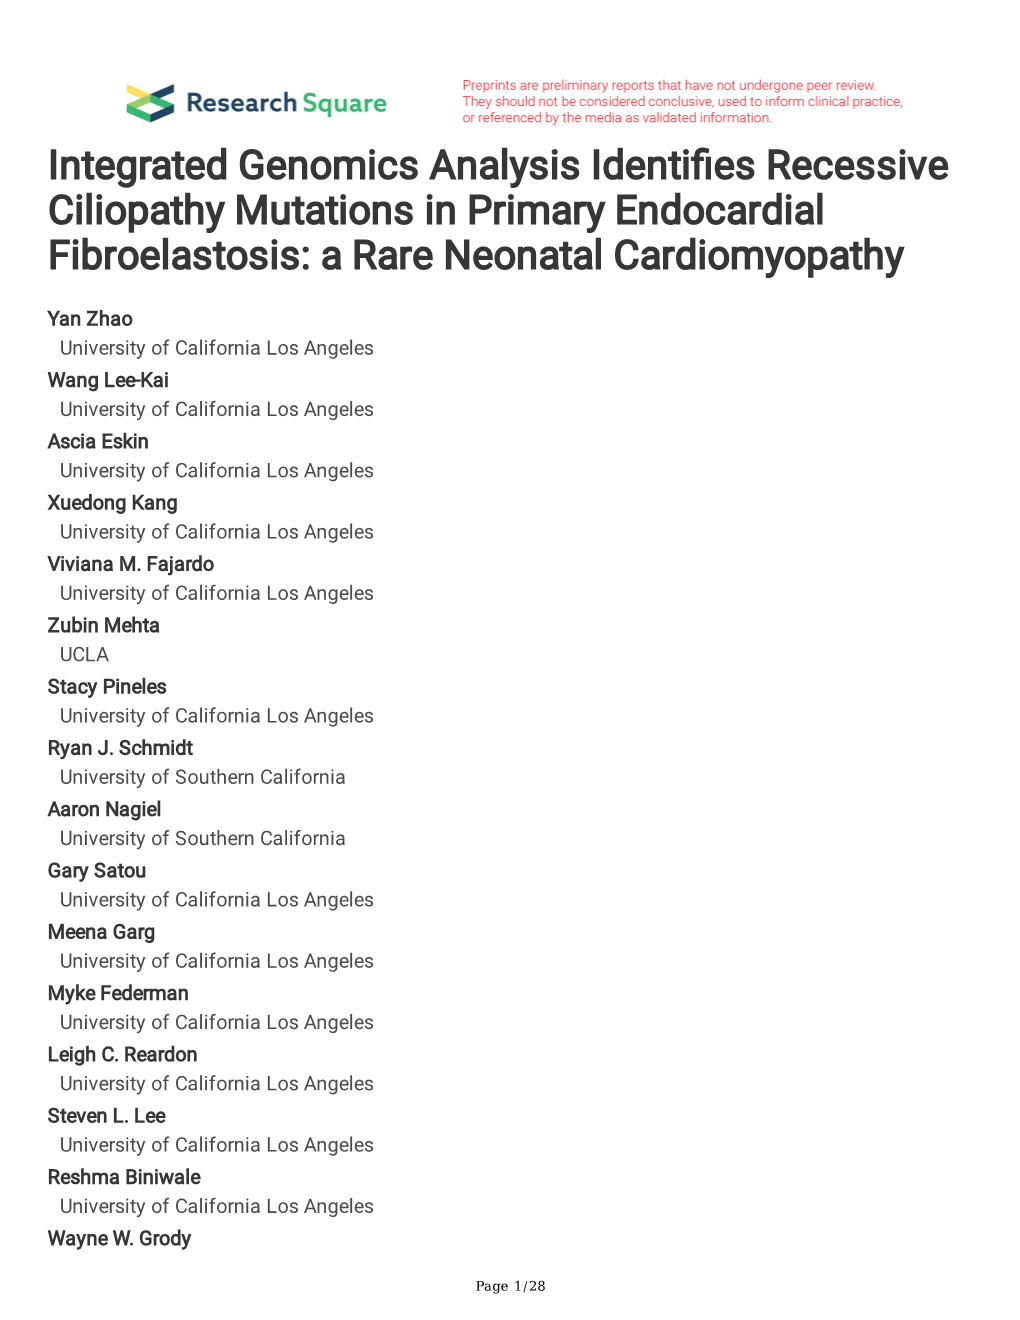 Integrated Genomics Analysis Identi Es Recessive Ciliopathy Mutations in Primary Endocardial Fibroelastosis